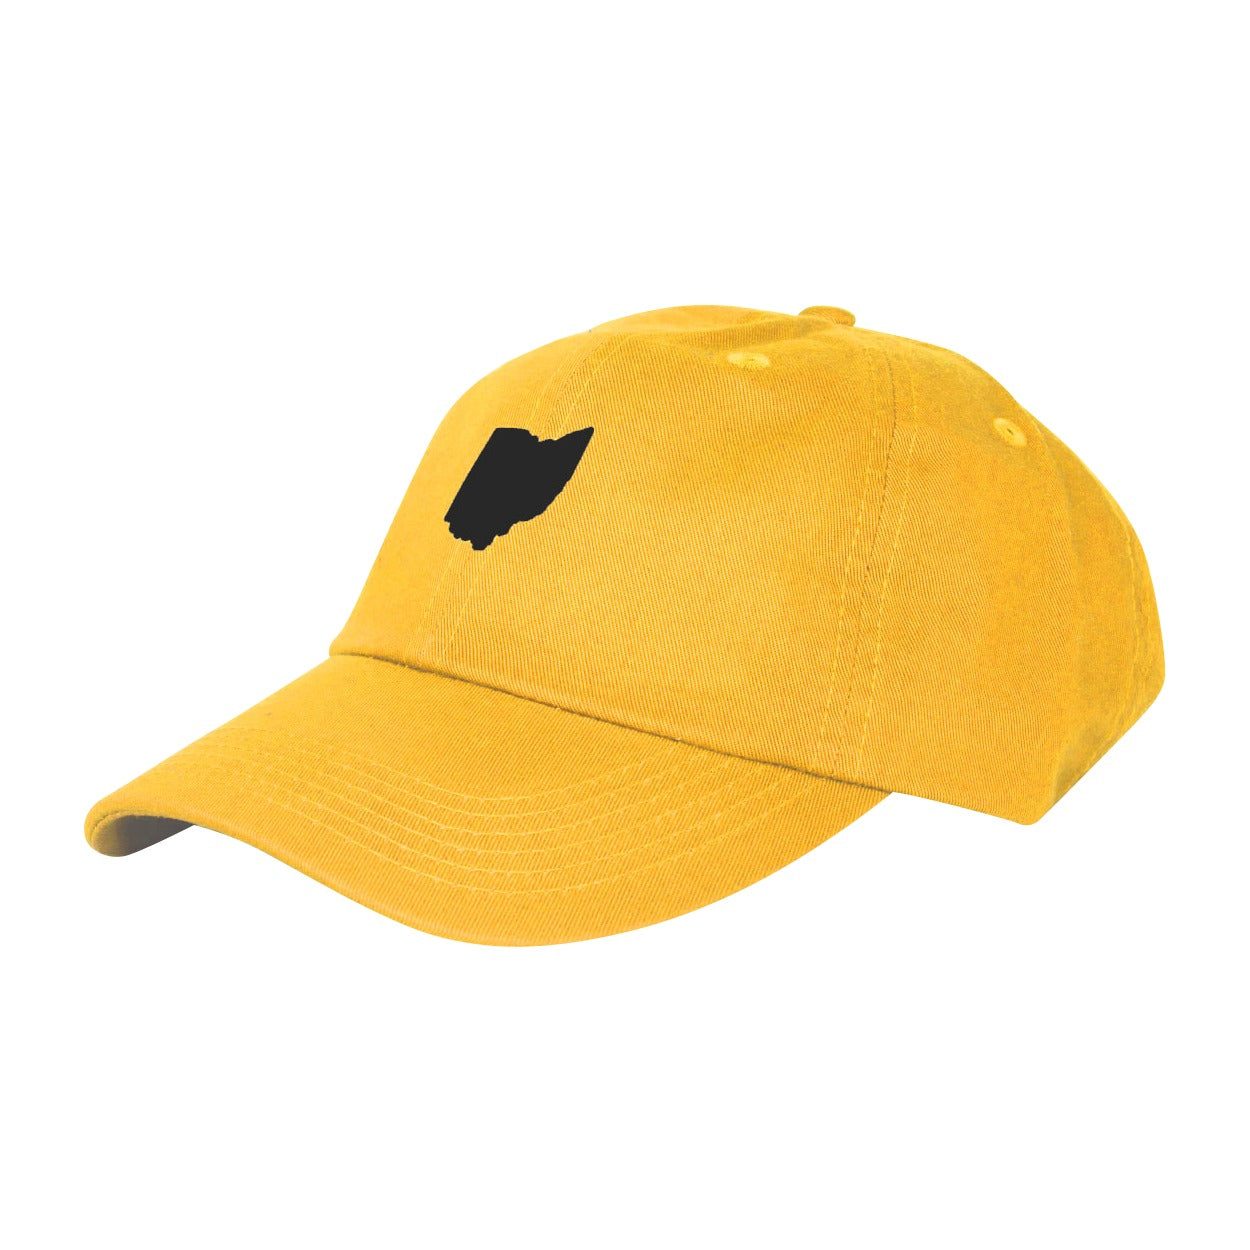 Hats - Clothe Ohio - Ohio Shirts and Apparel